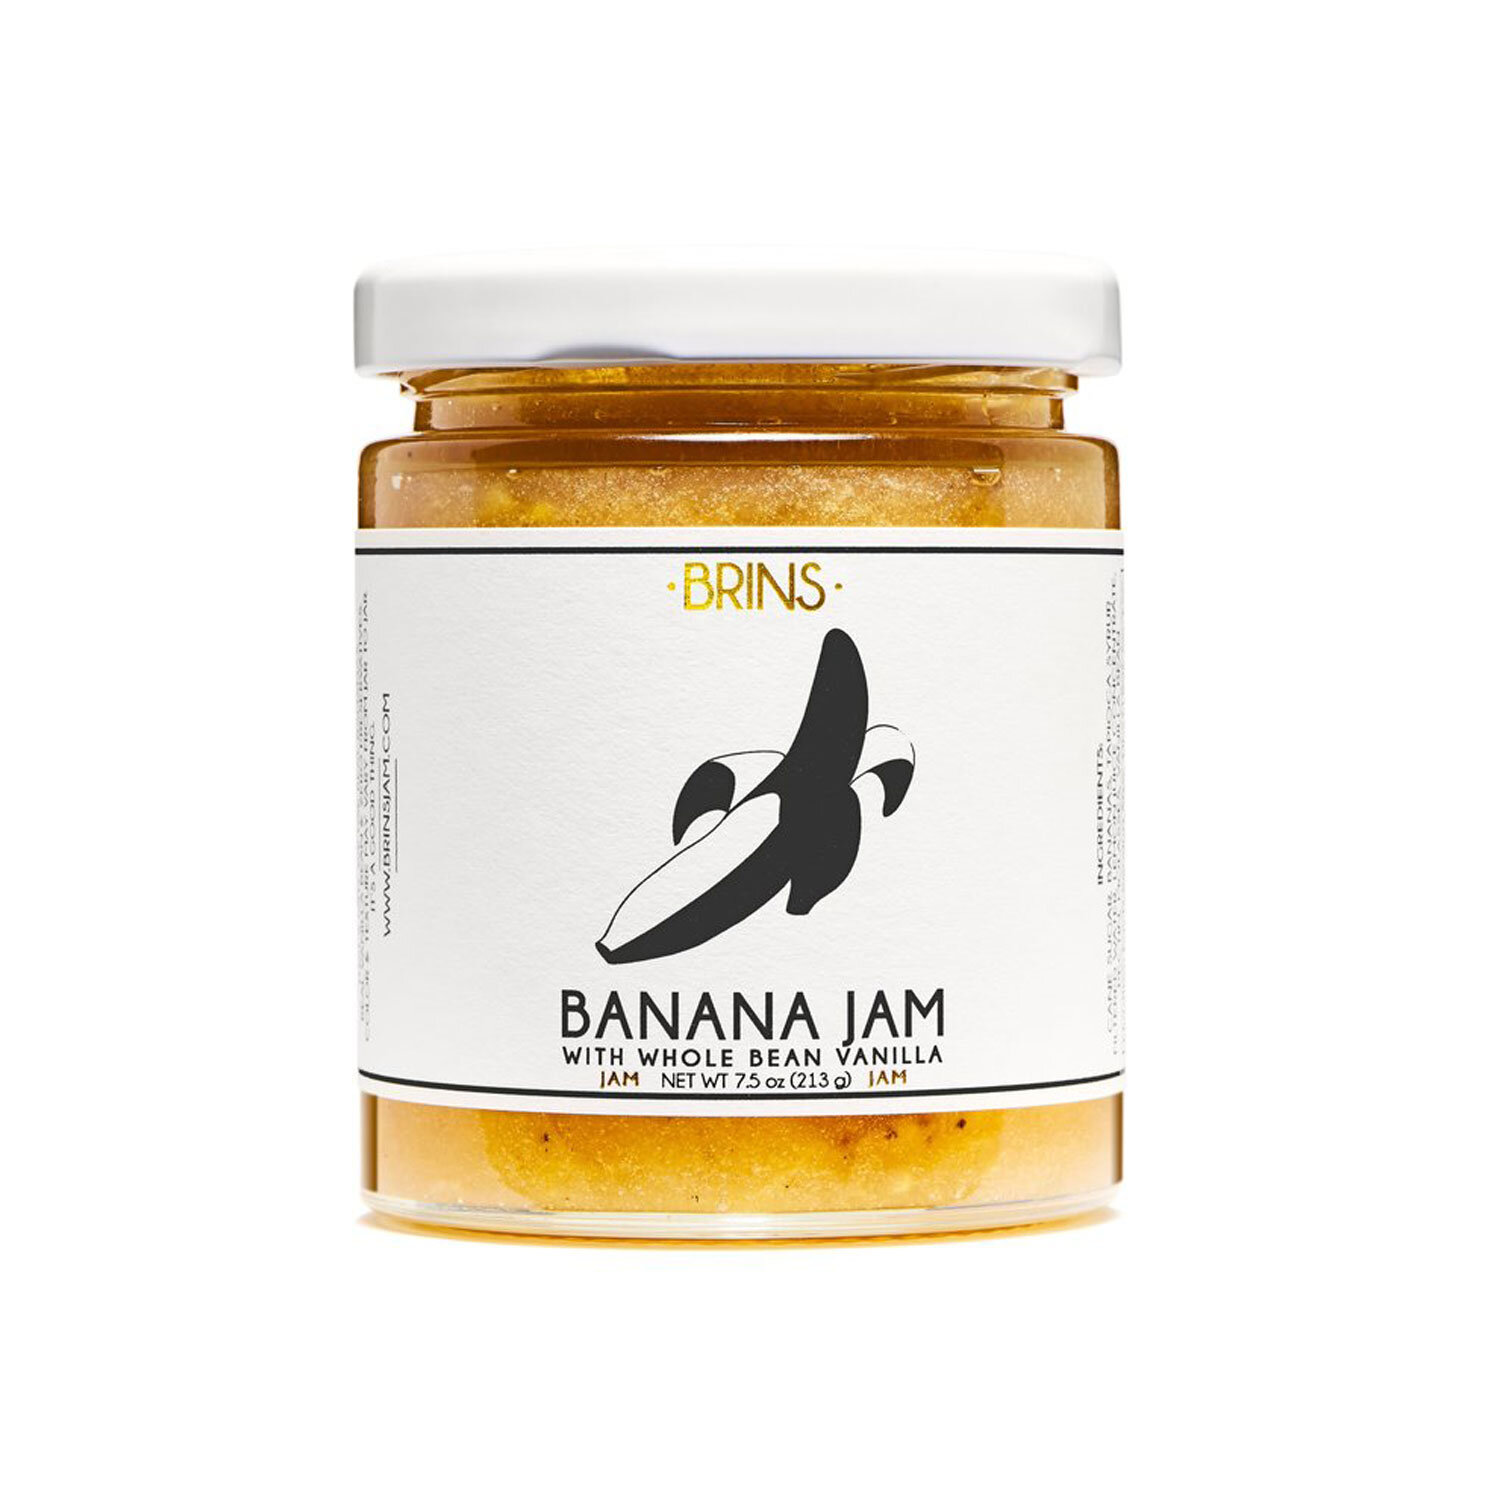 Banana Jam by Brins